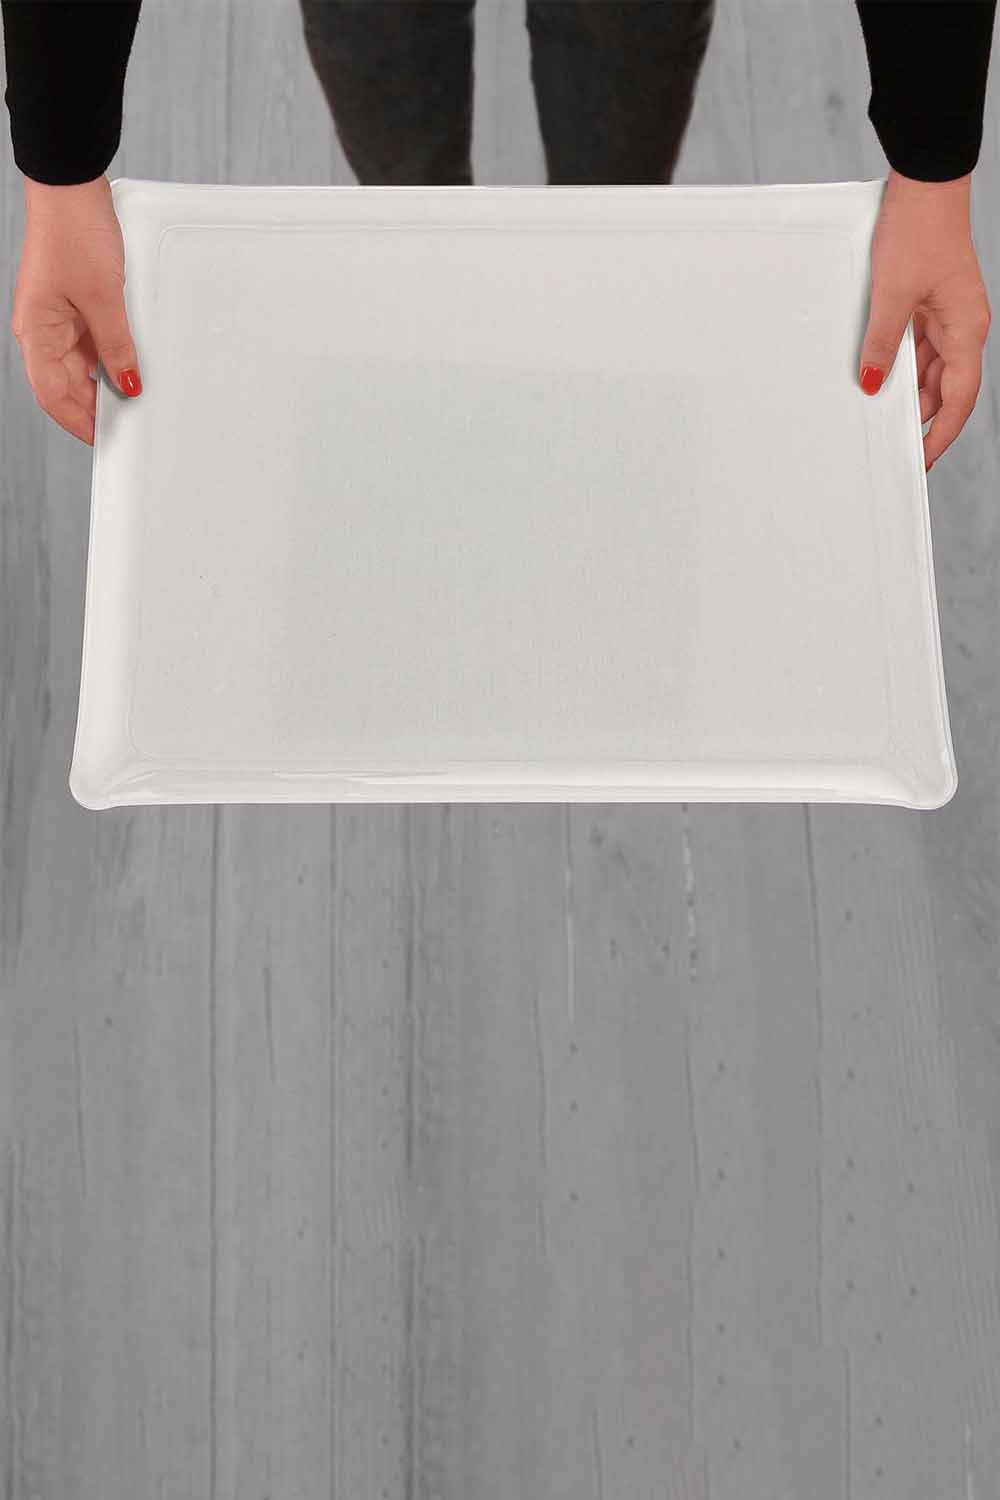 Linen Acrylic Tray, Blanc, 46x36cm